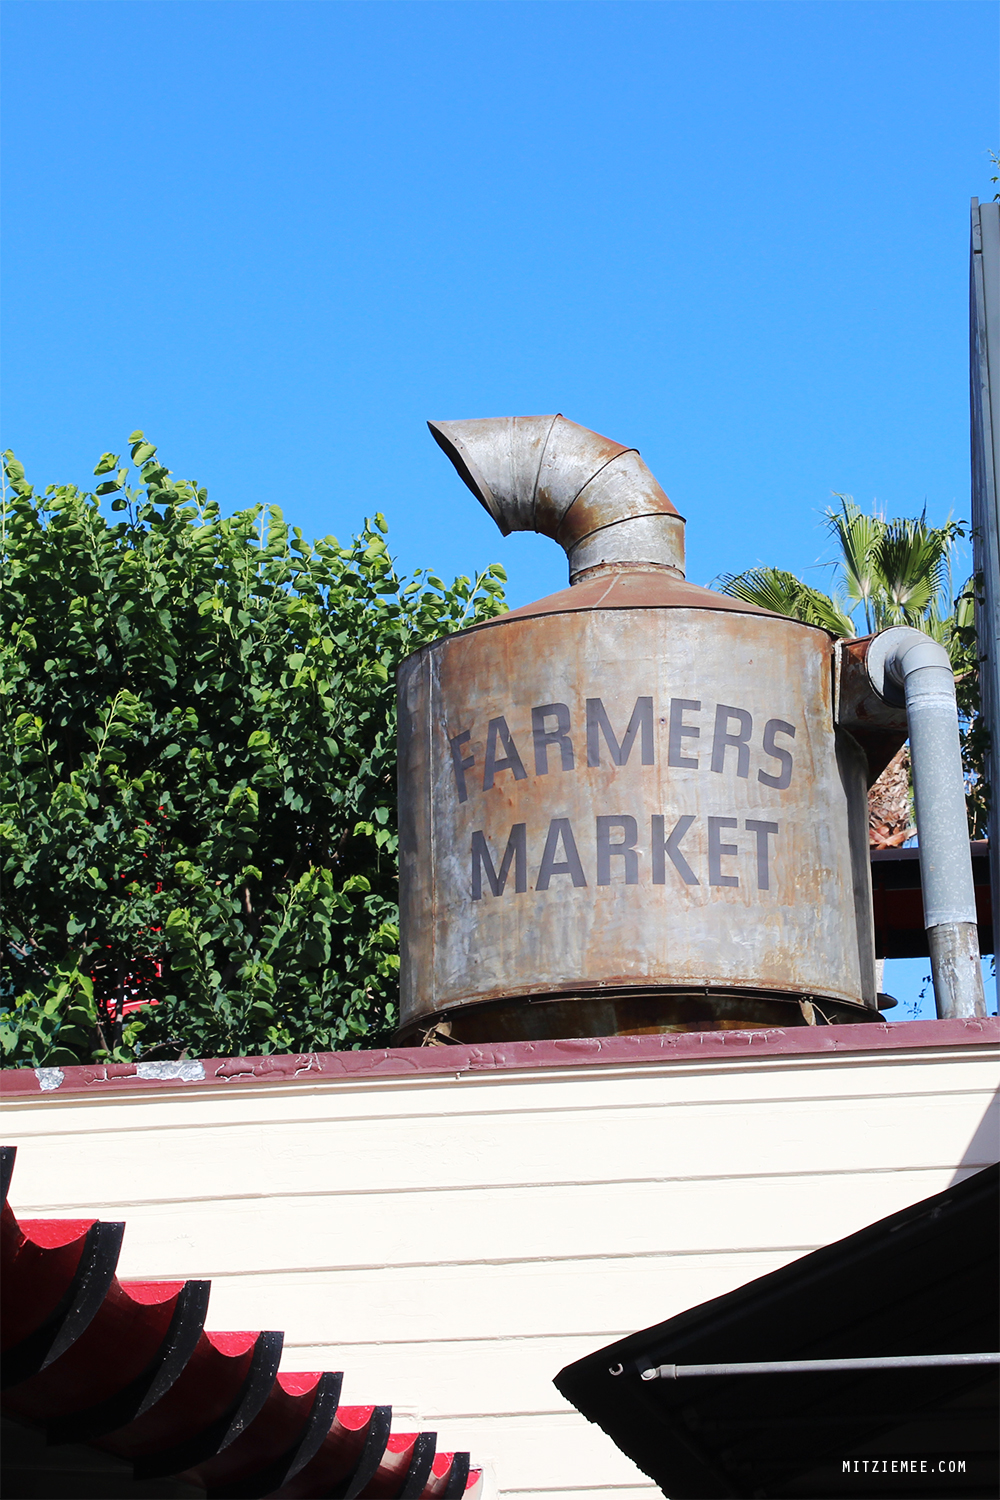 The Grove/Farmers Market, Los Angeles